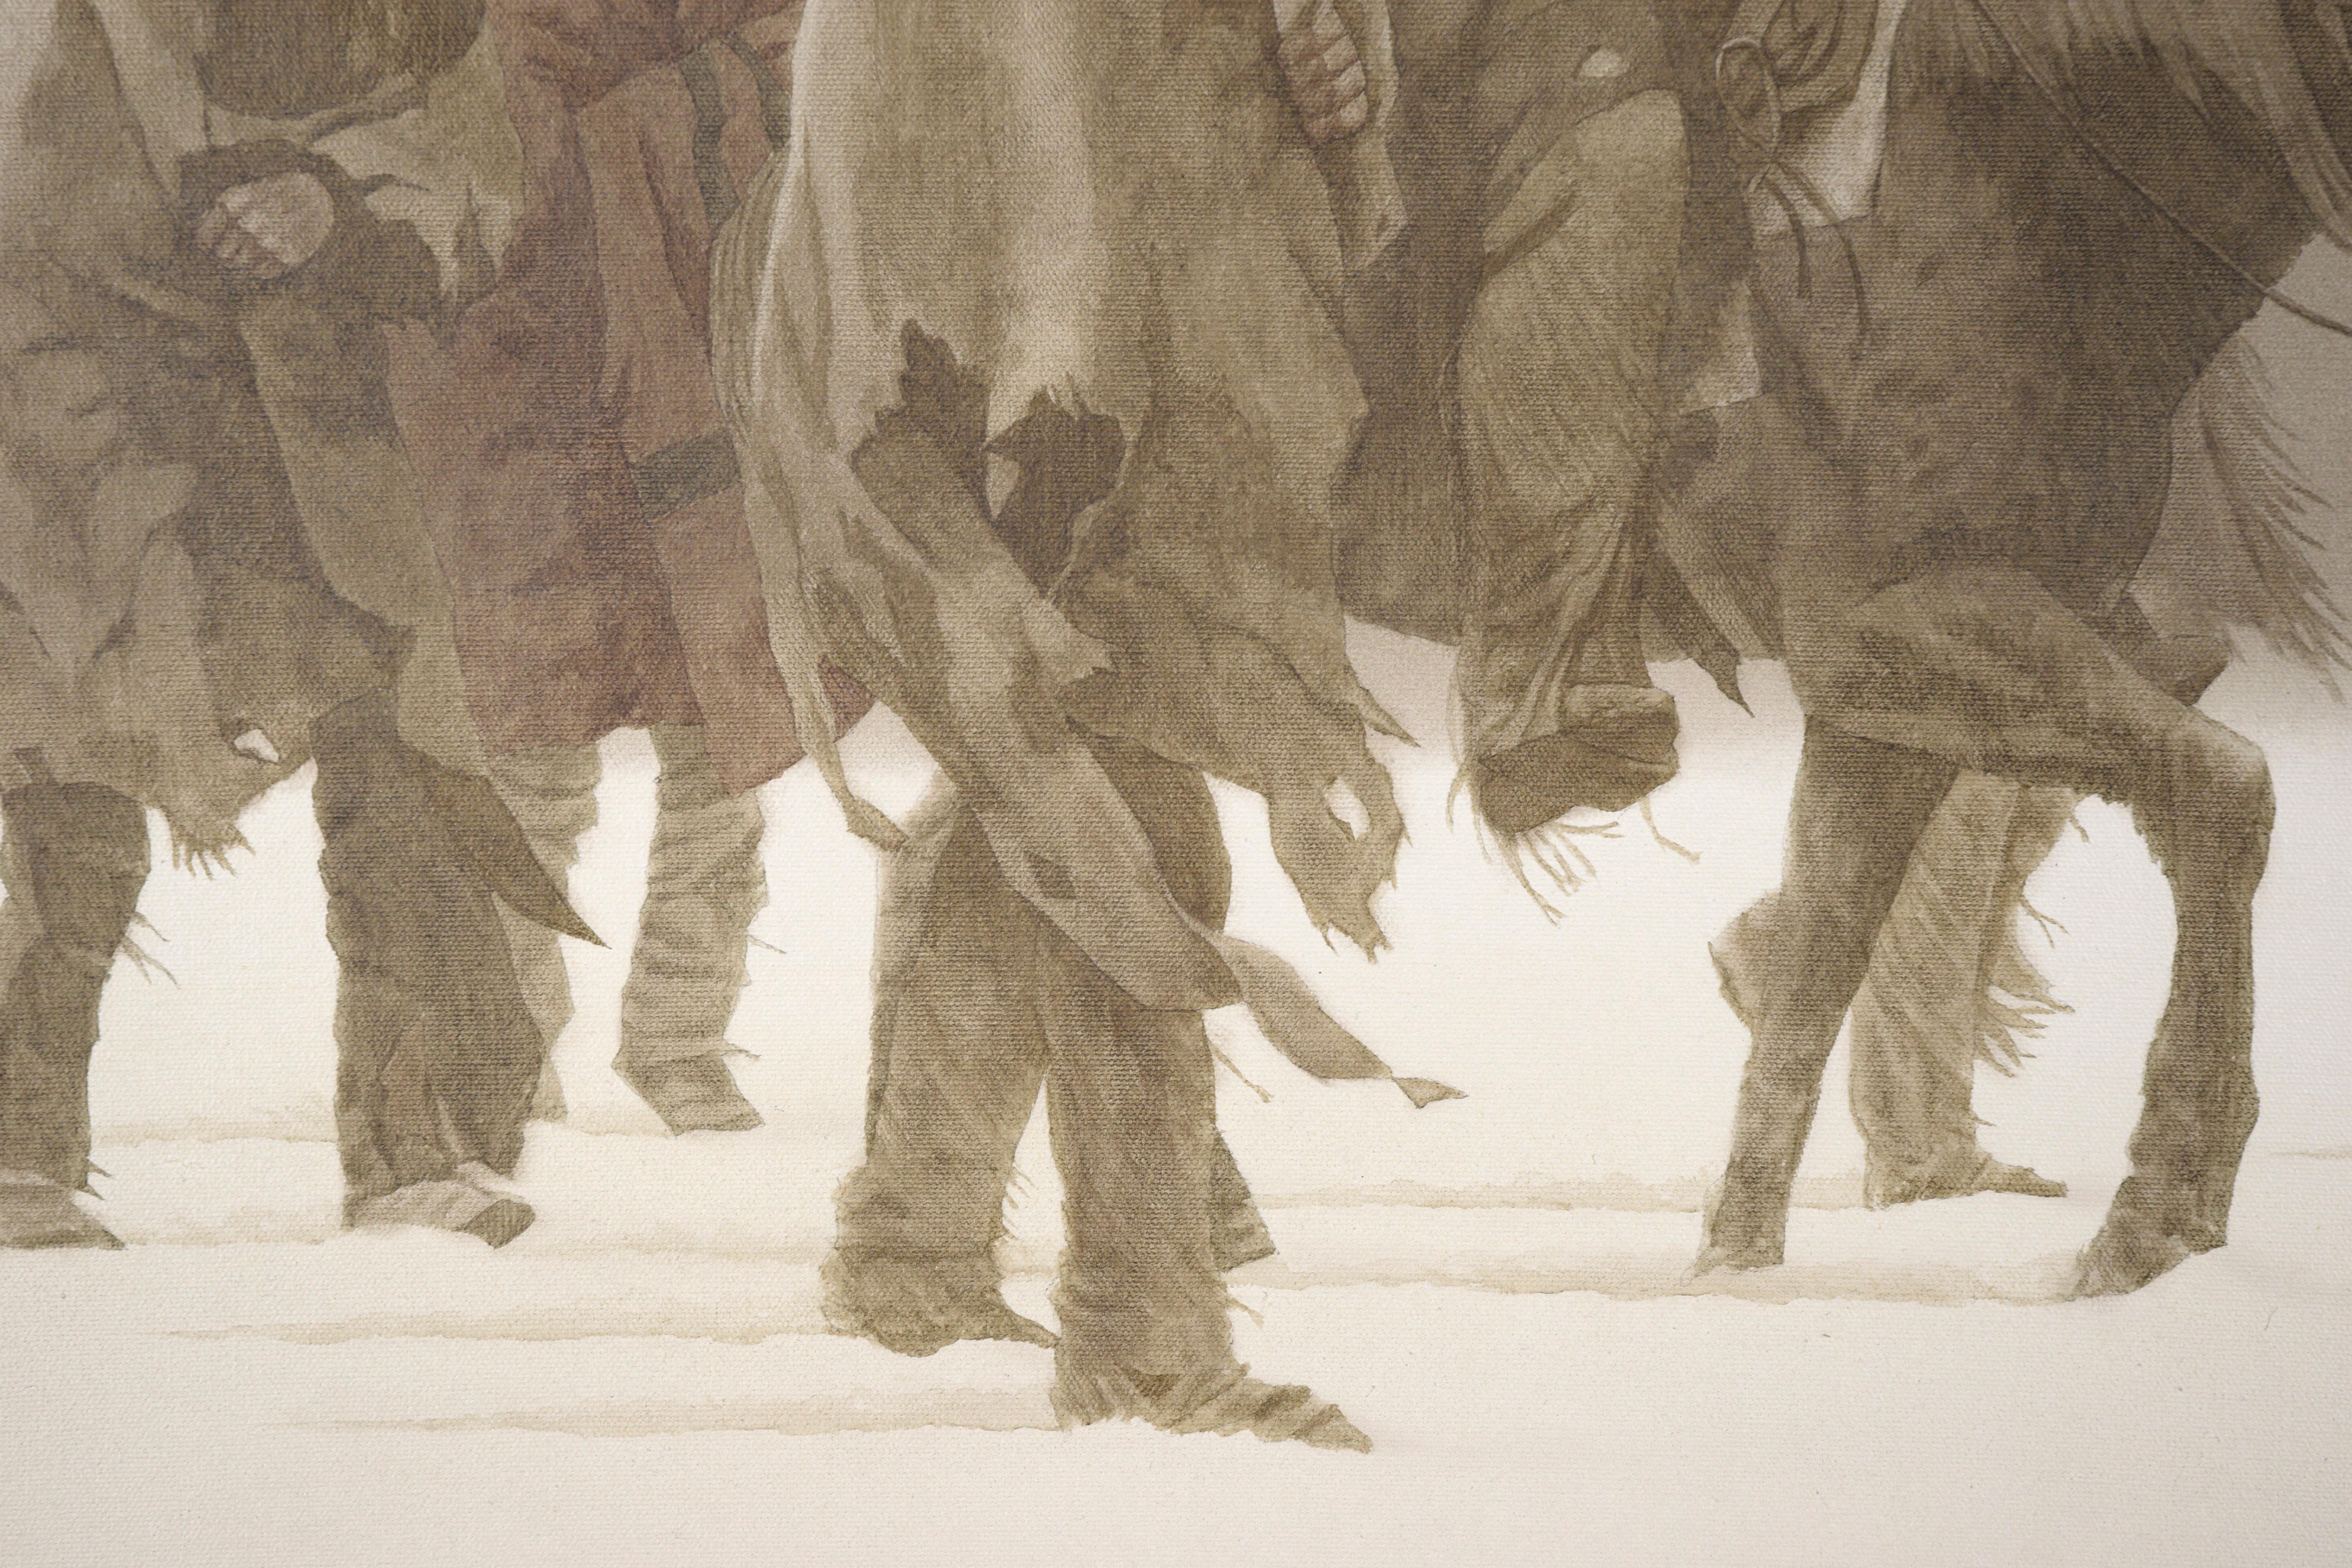 Hard Winter's Journey - Photorealist Painting by John Nicholas Pace